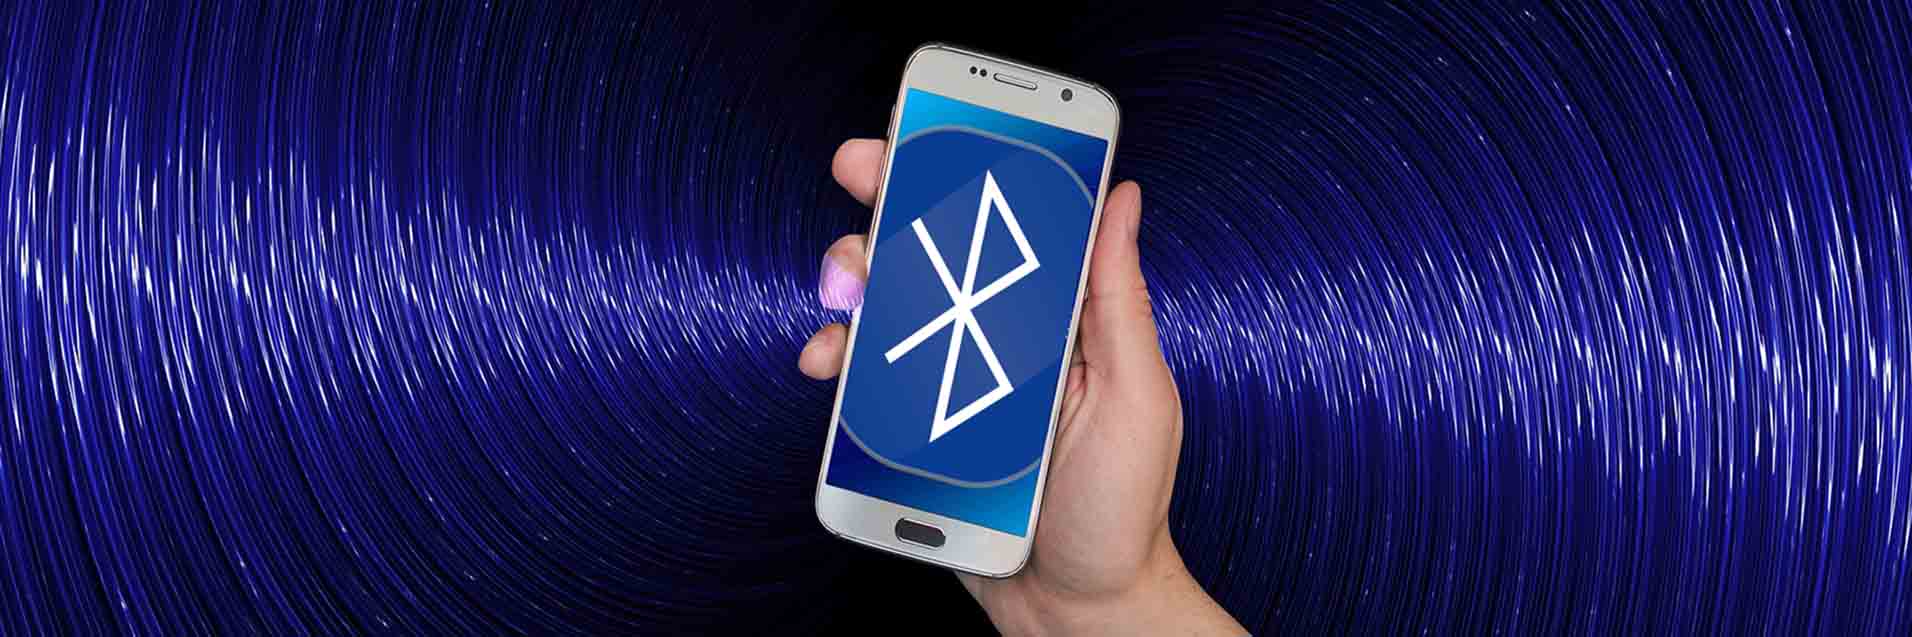 Bluetooth-Corona-App auf dem Smartphone